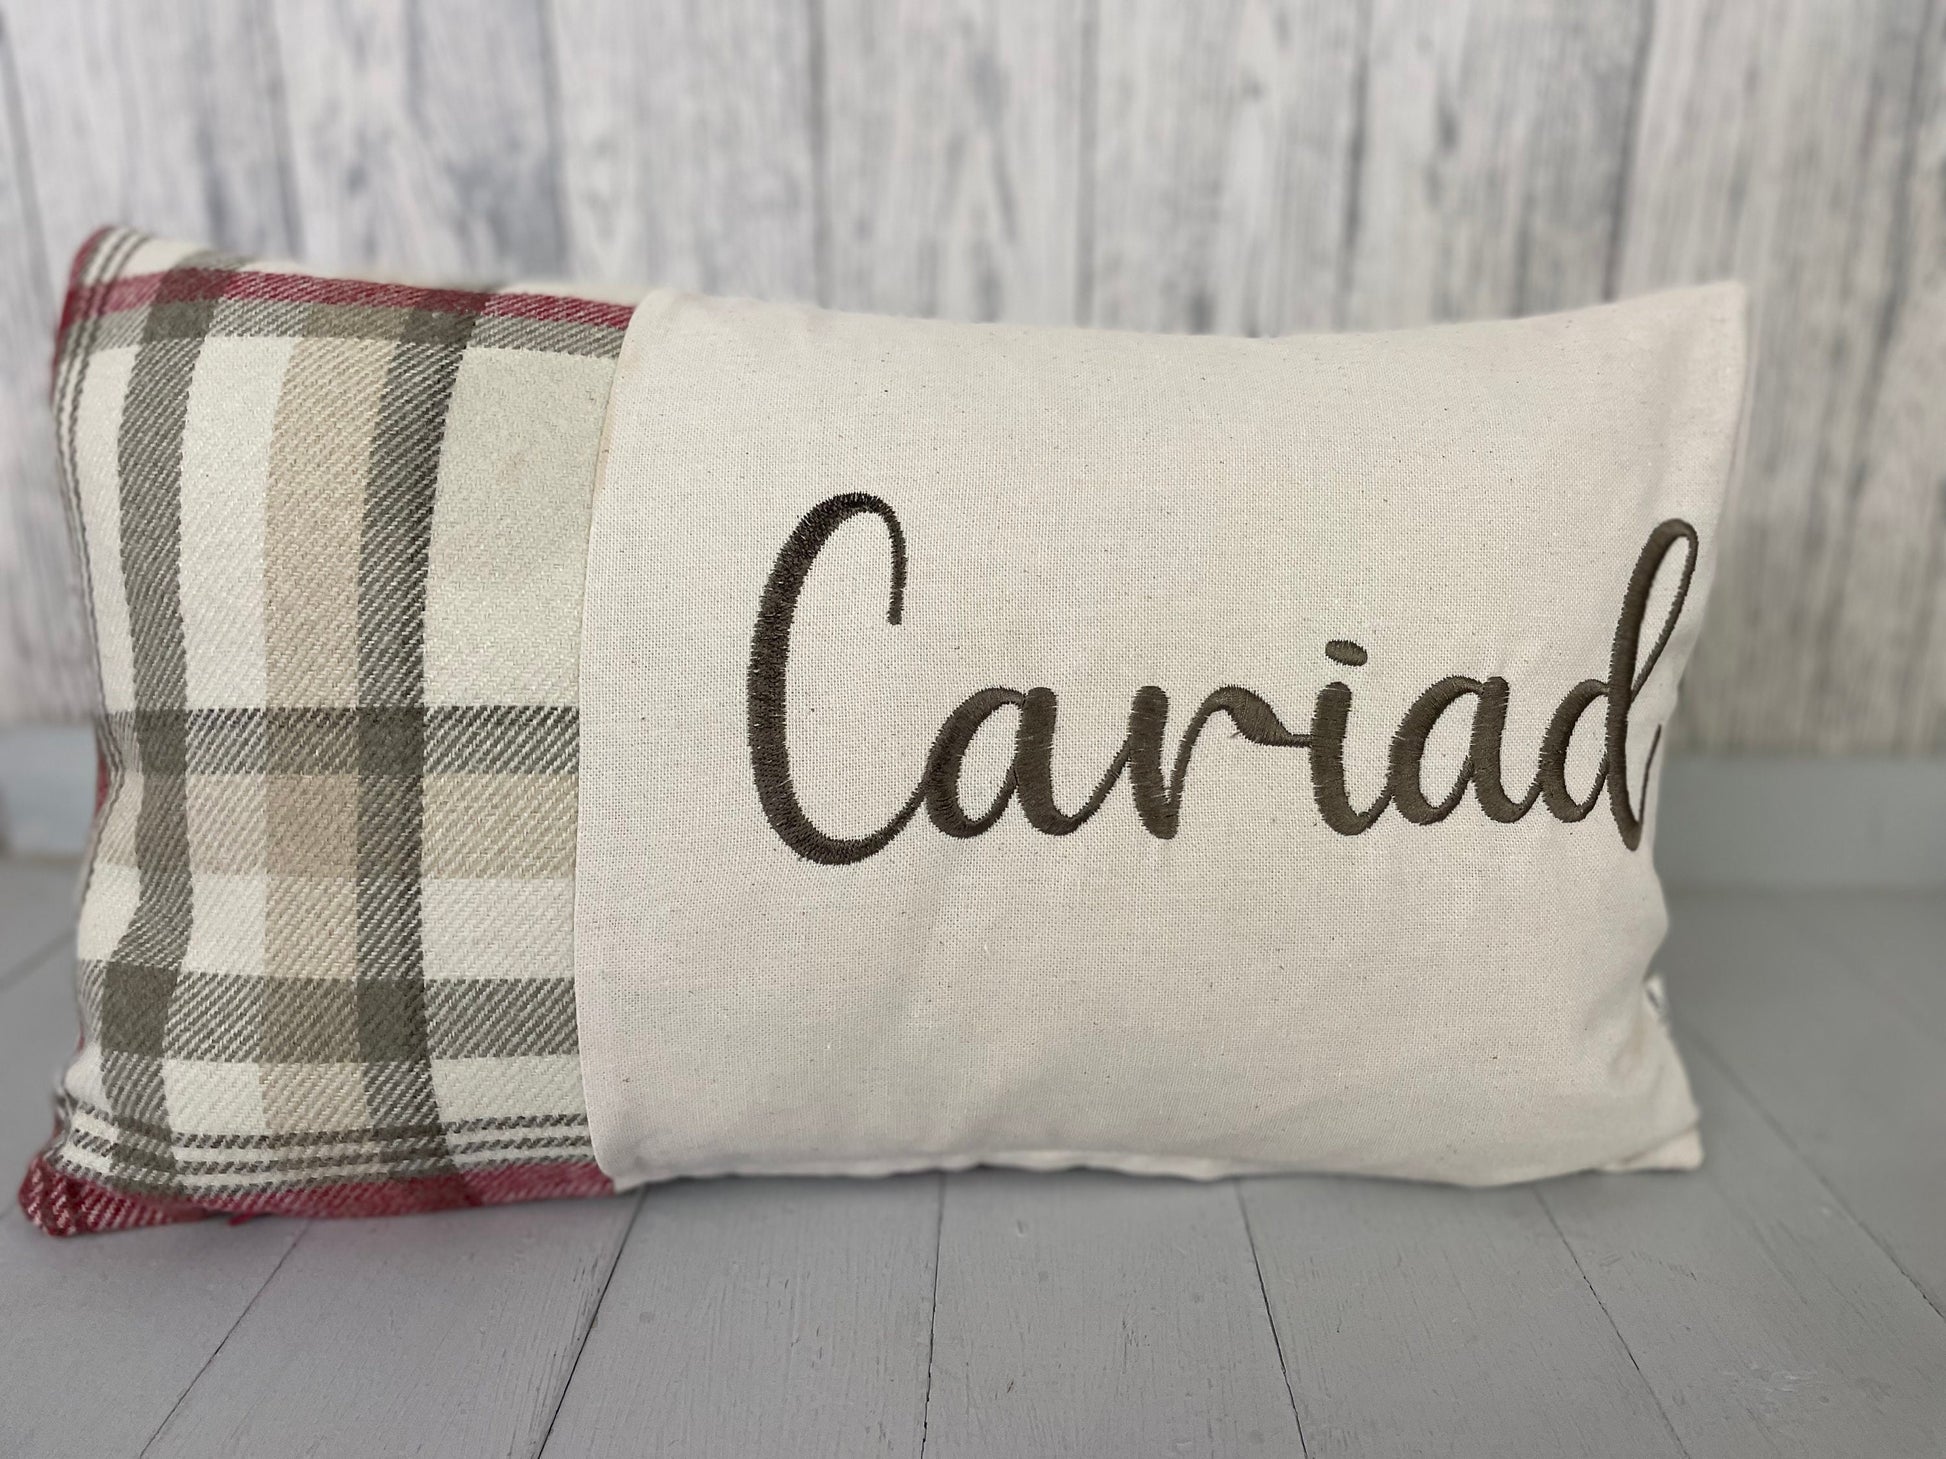 Cariad Cushion- Cranberry wool touch long cushion-welsh quote cushion